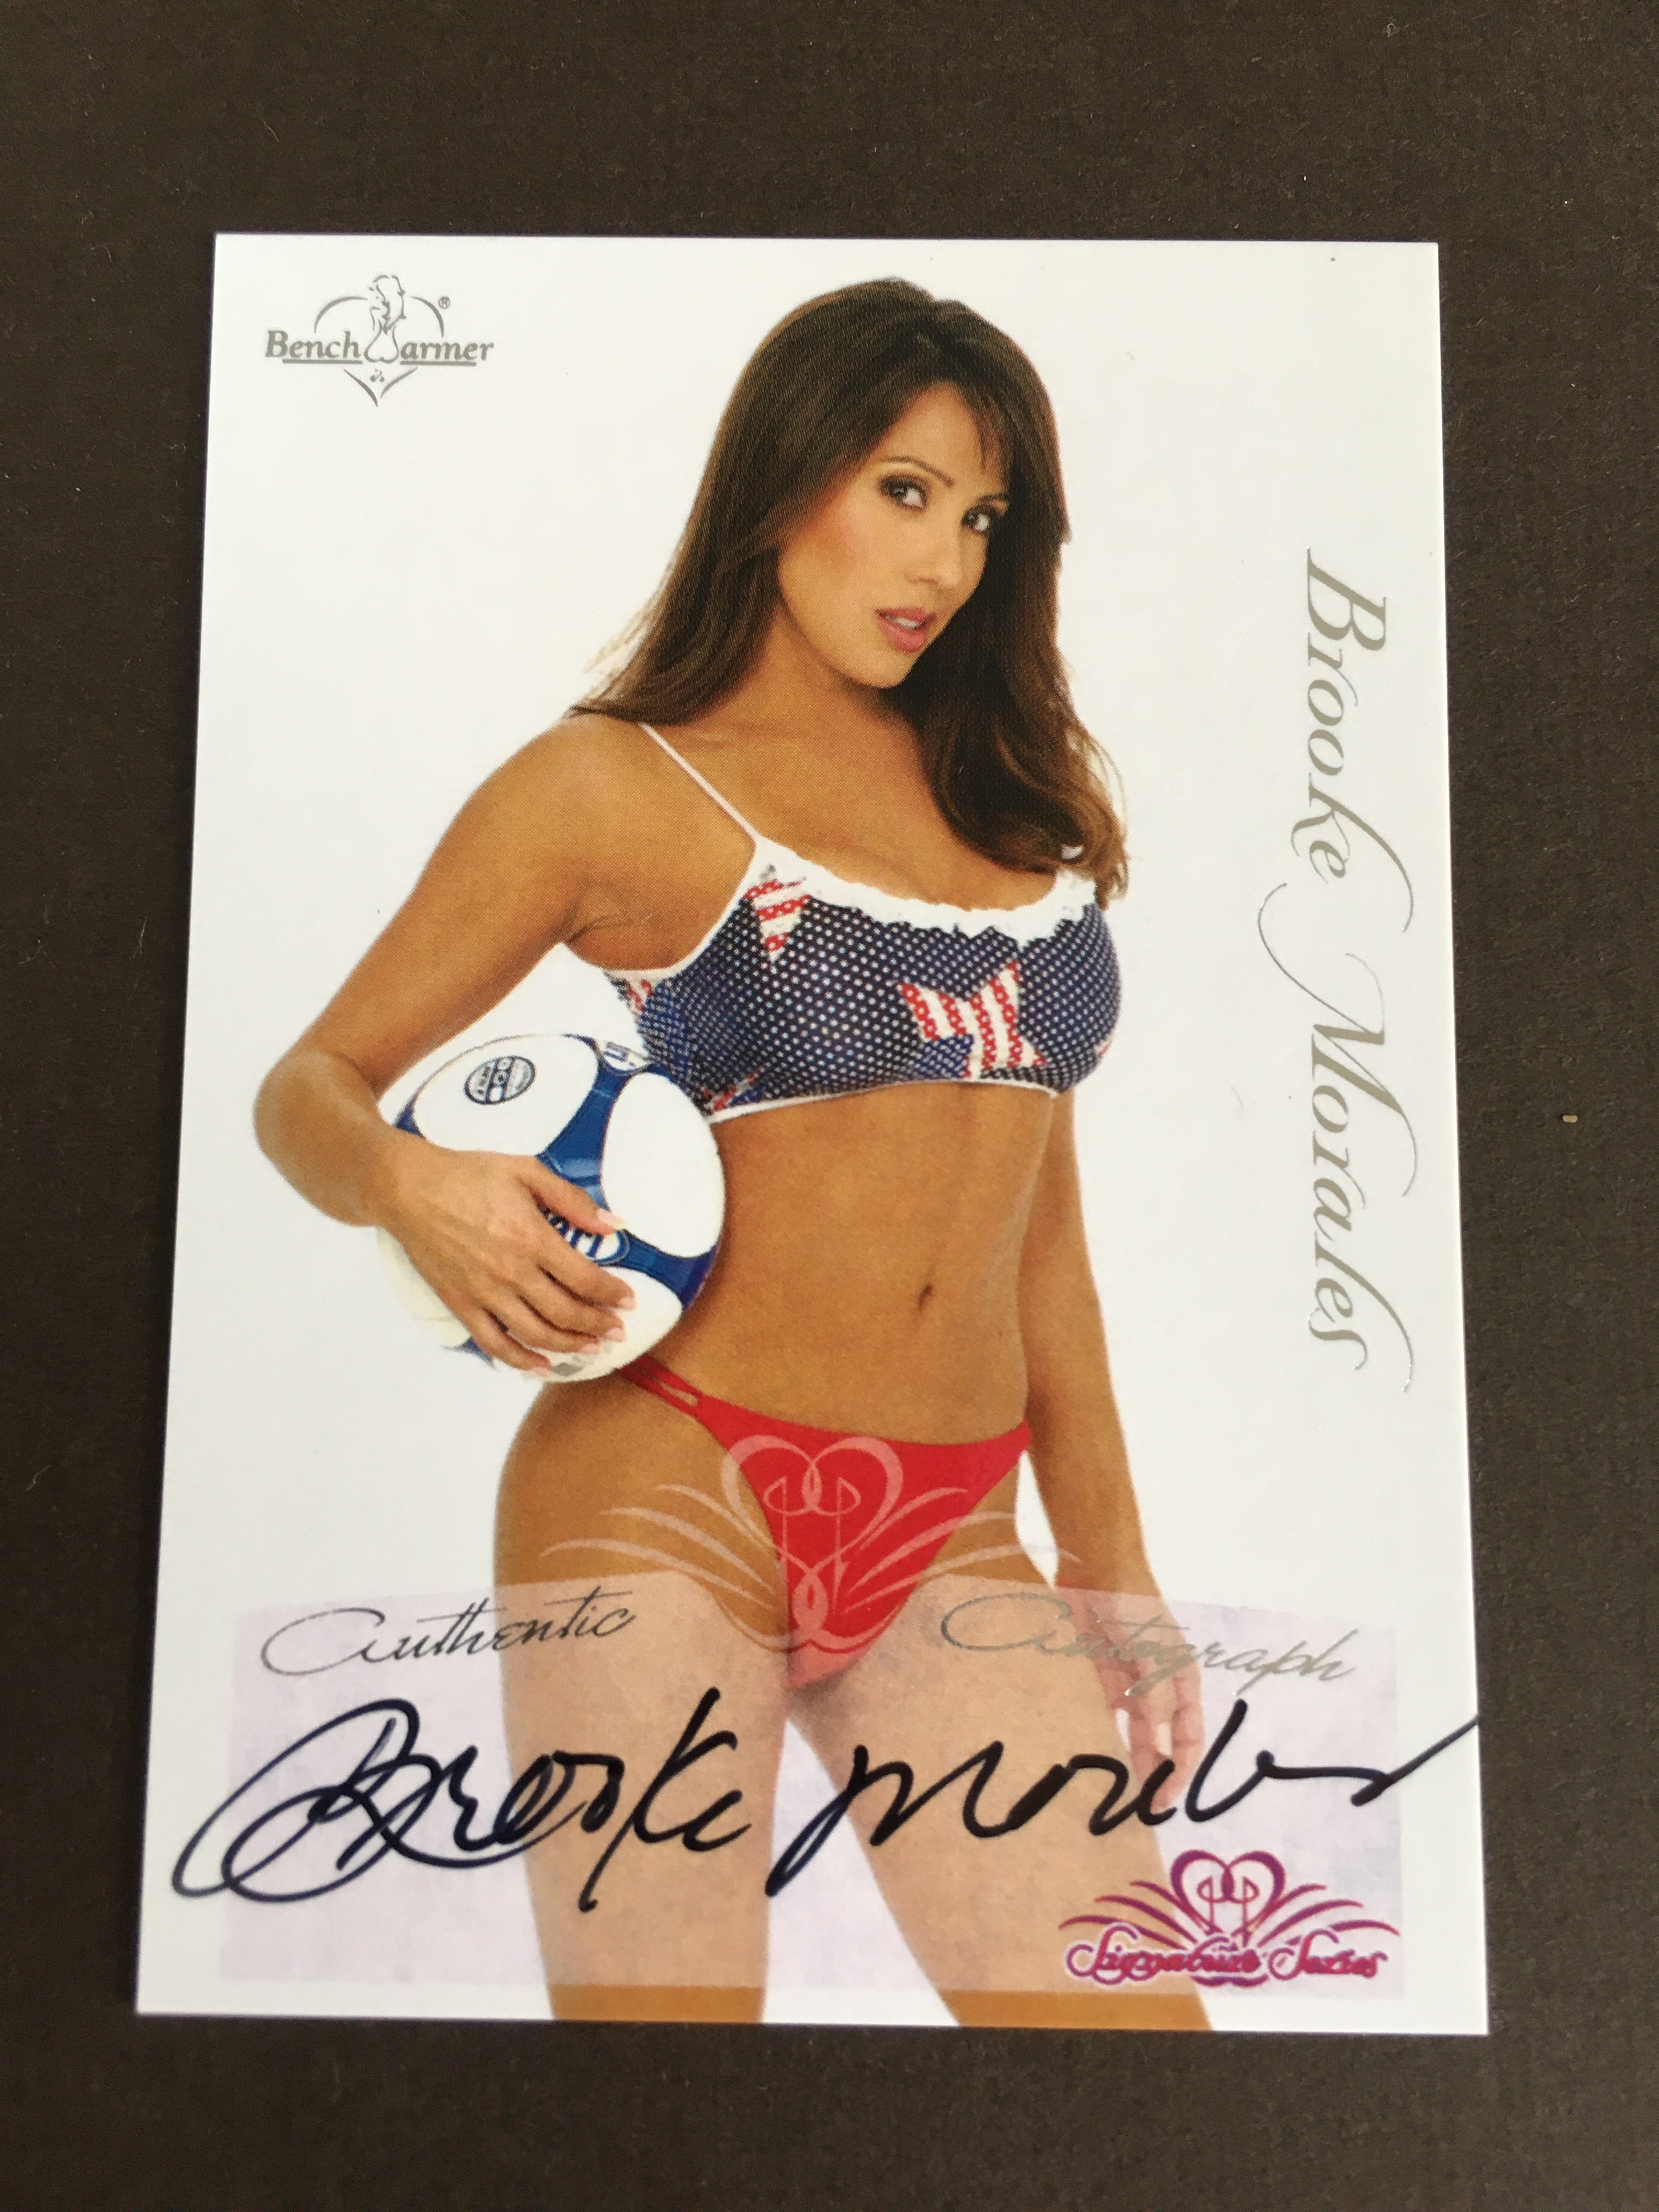 Brooke Morales - Autographed Benchwarmer Trading Card (1)